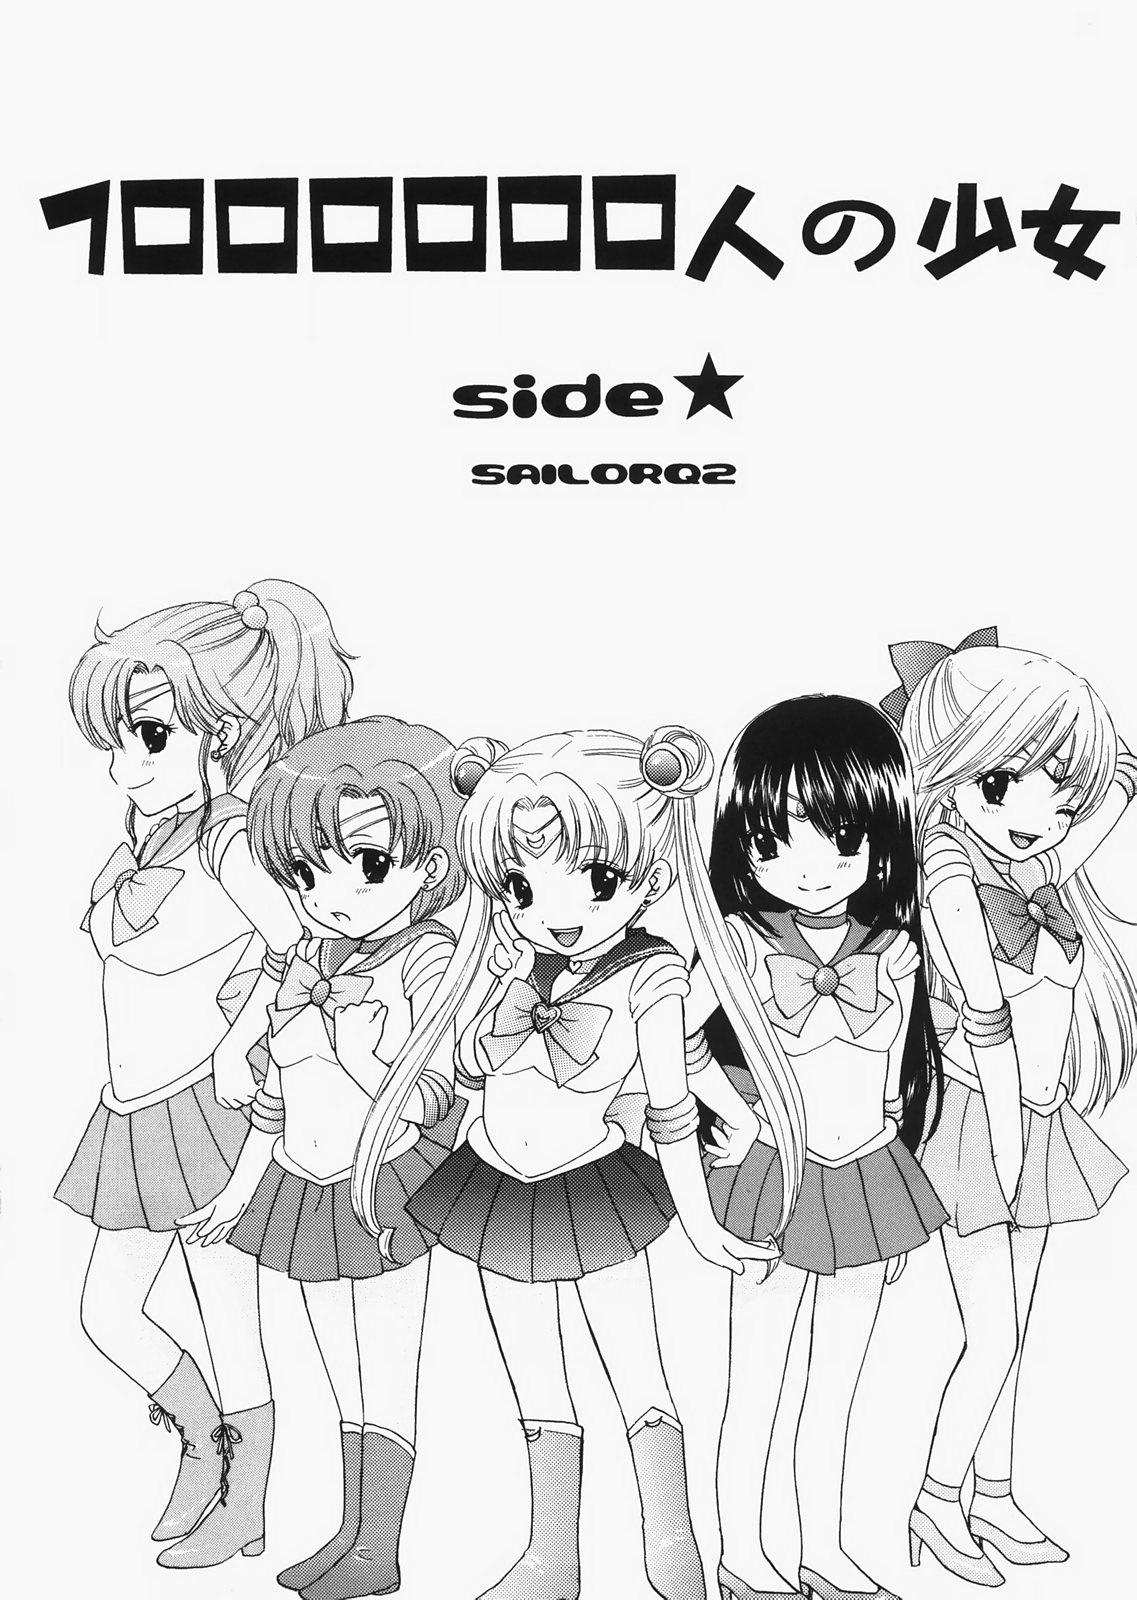 Gay Cumshots 1000000-nin no Shoujo side star - Sailor moon Bra - Page 4